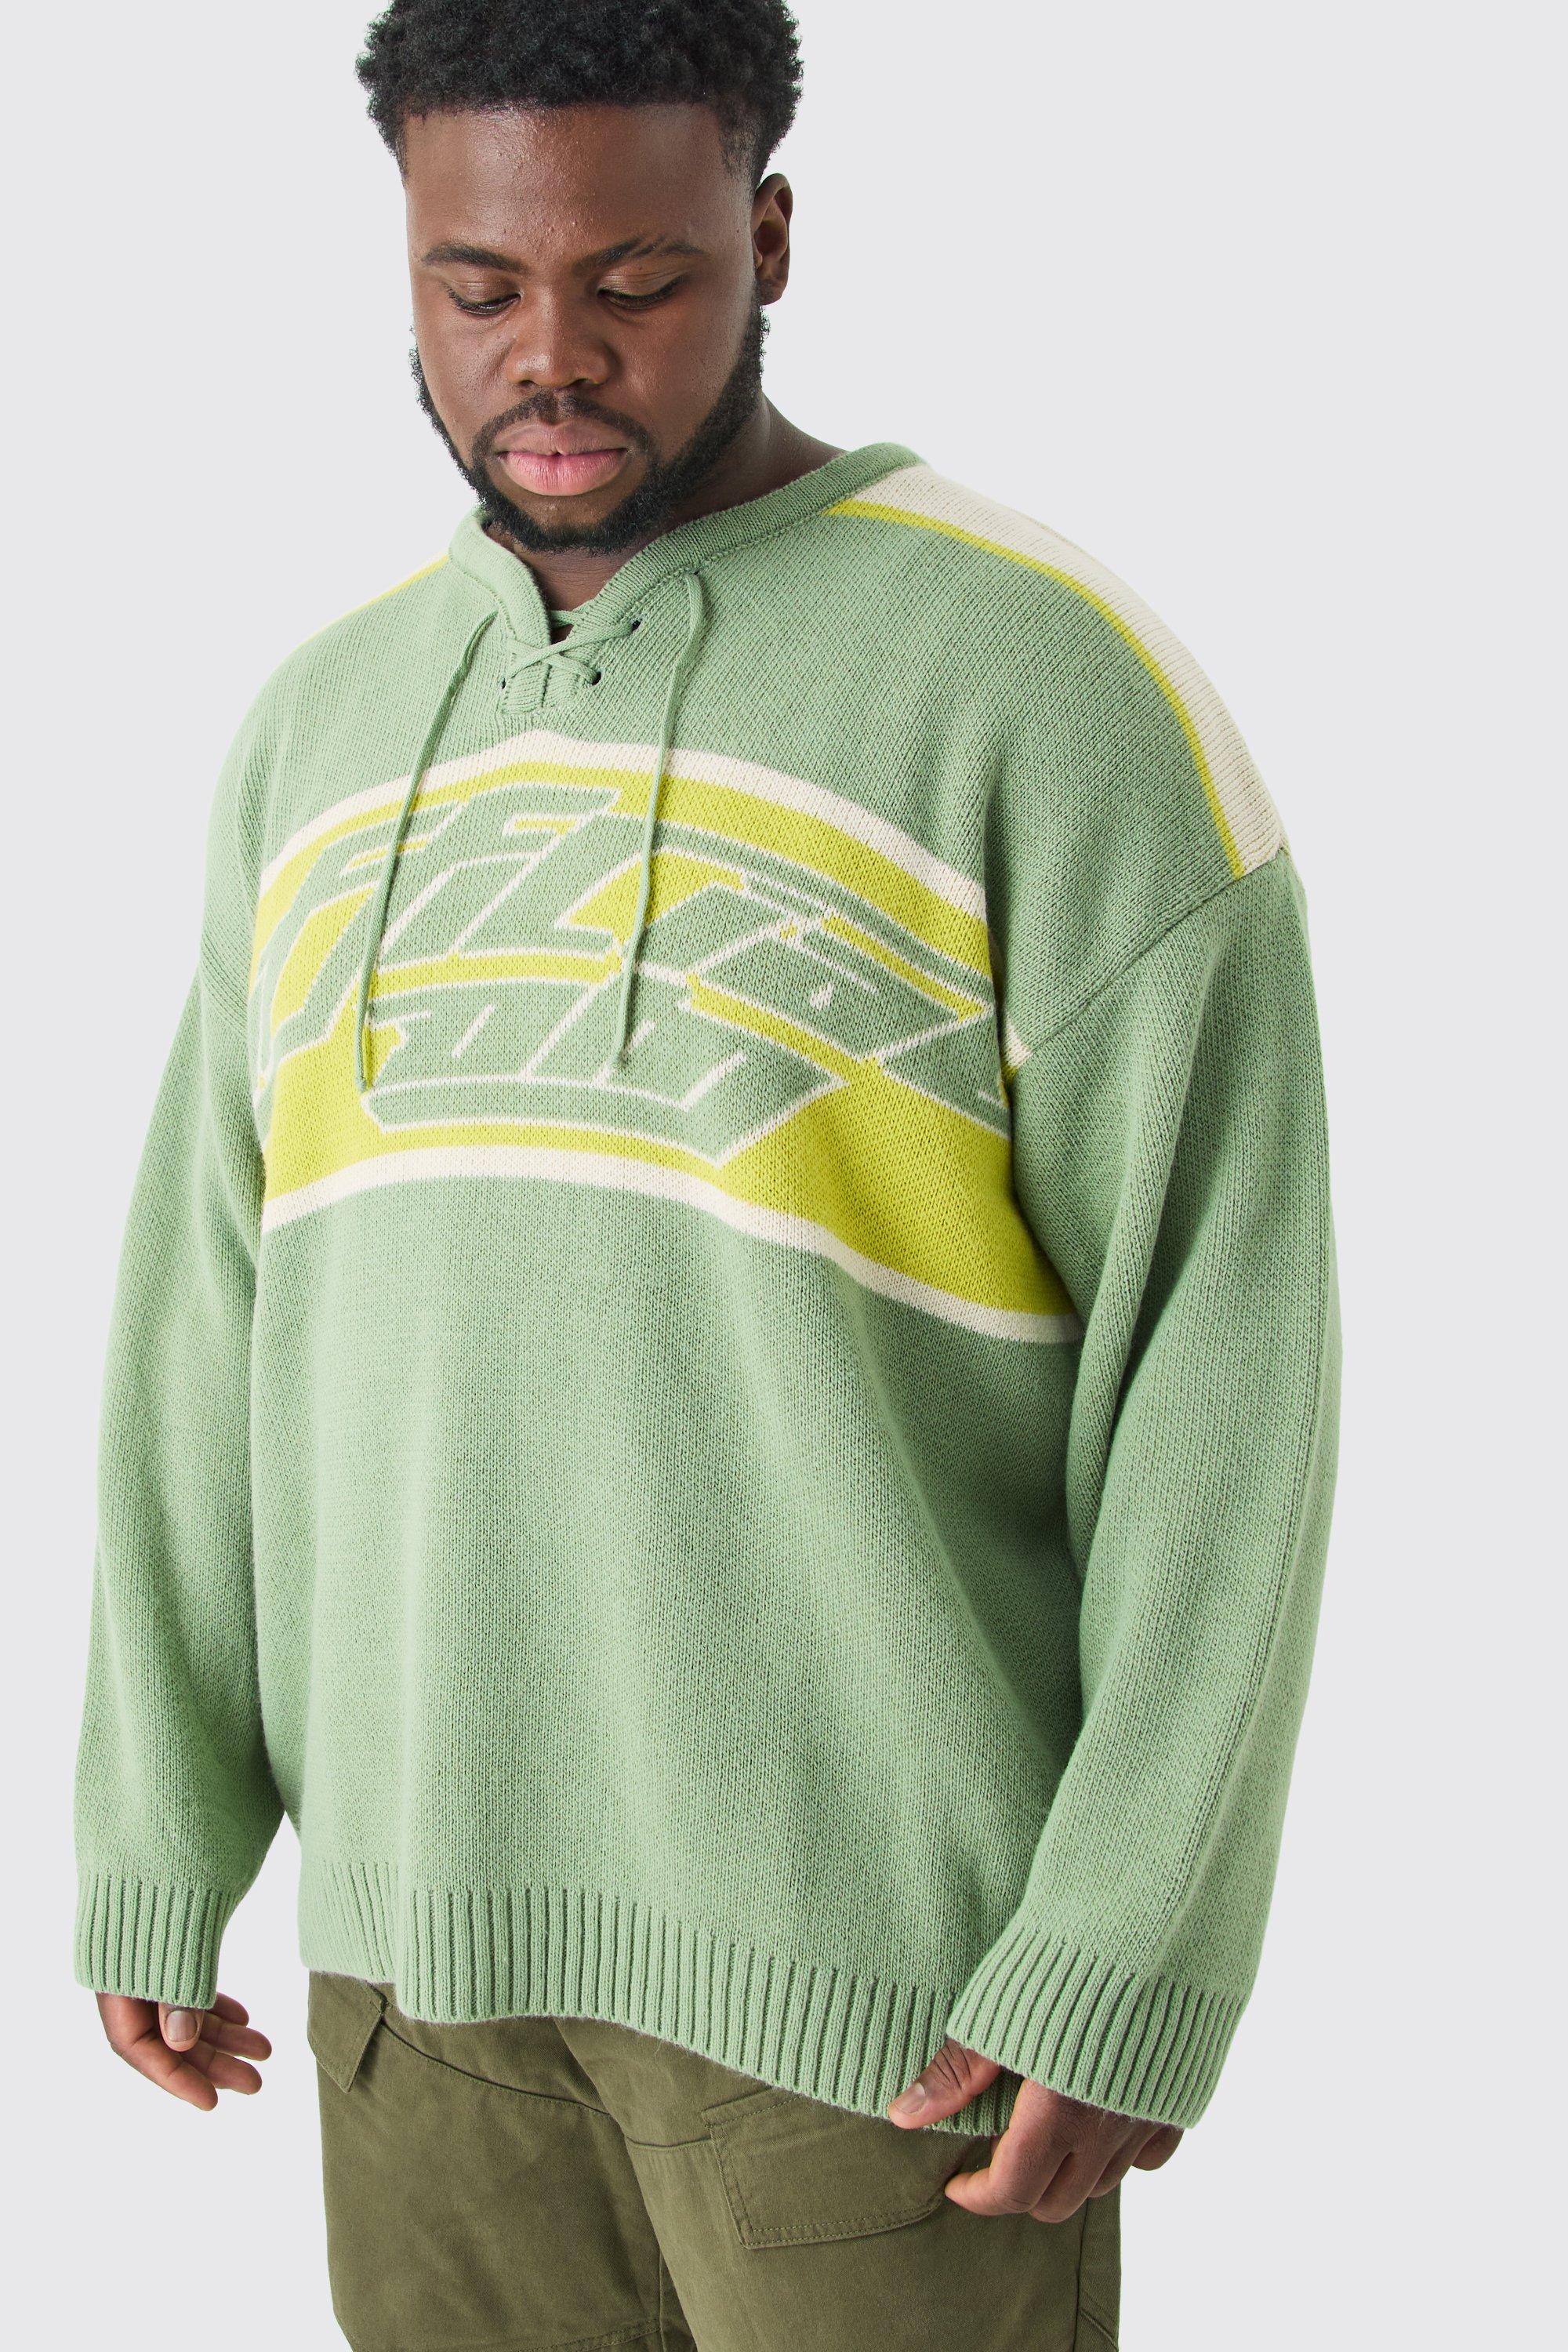 plus oversized knitted hockey top with tie detail homme - vert - xxxl, vert